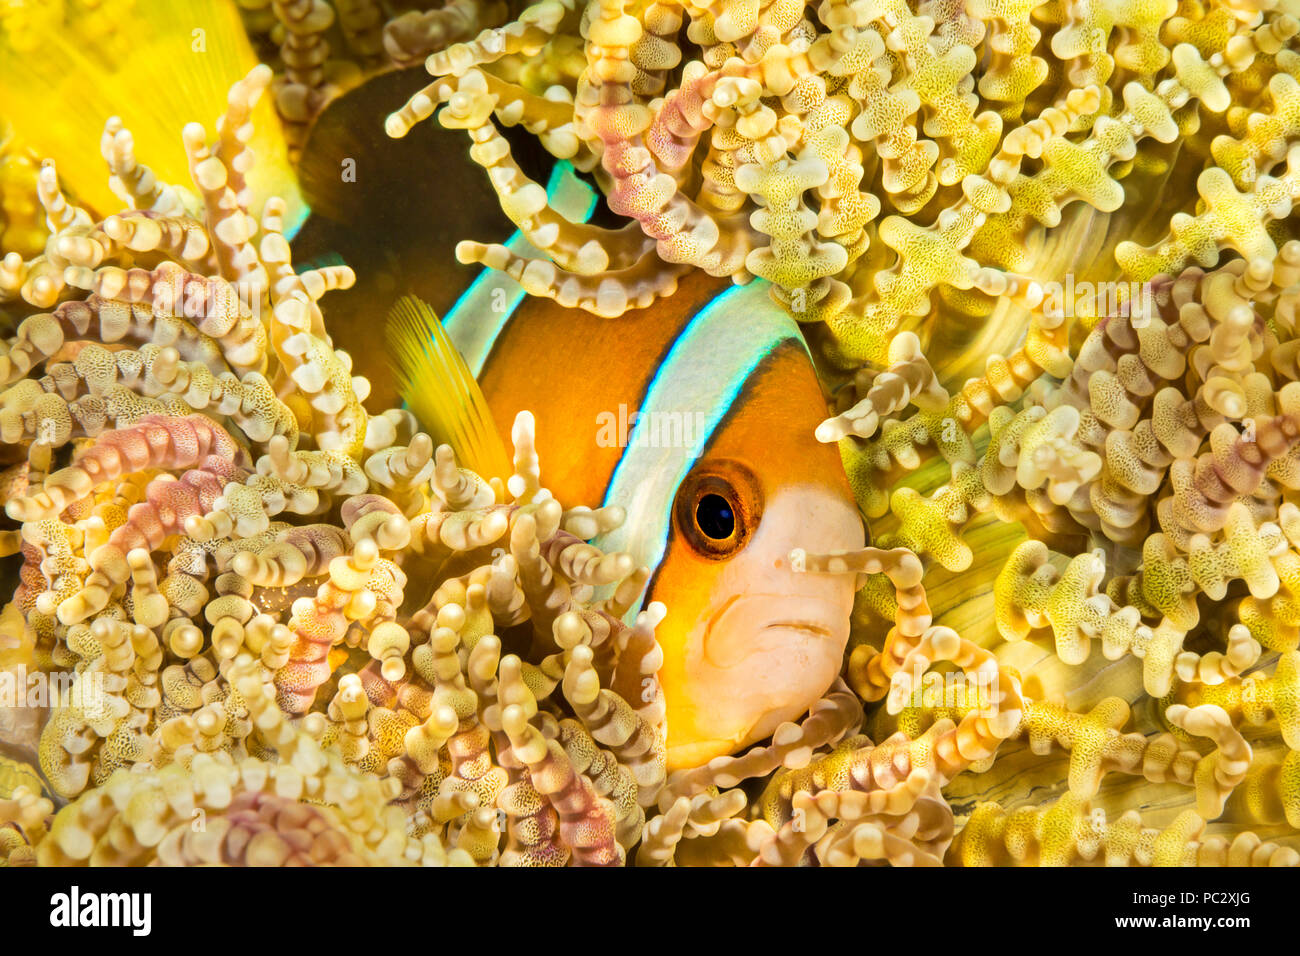 Clark's anemonefish, Amphiprion clarkii, in beaded sea anemone, Heteractis aurora, Philippines. Stock Photo